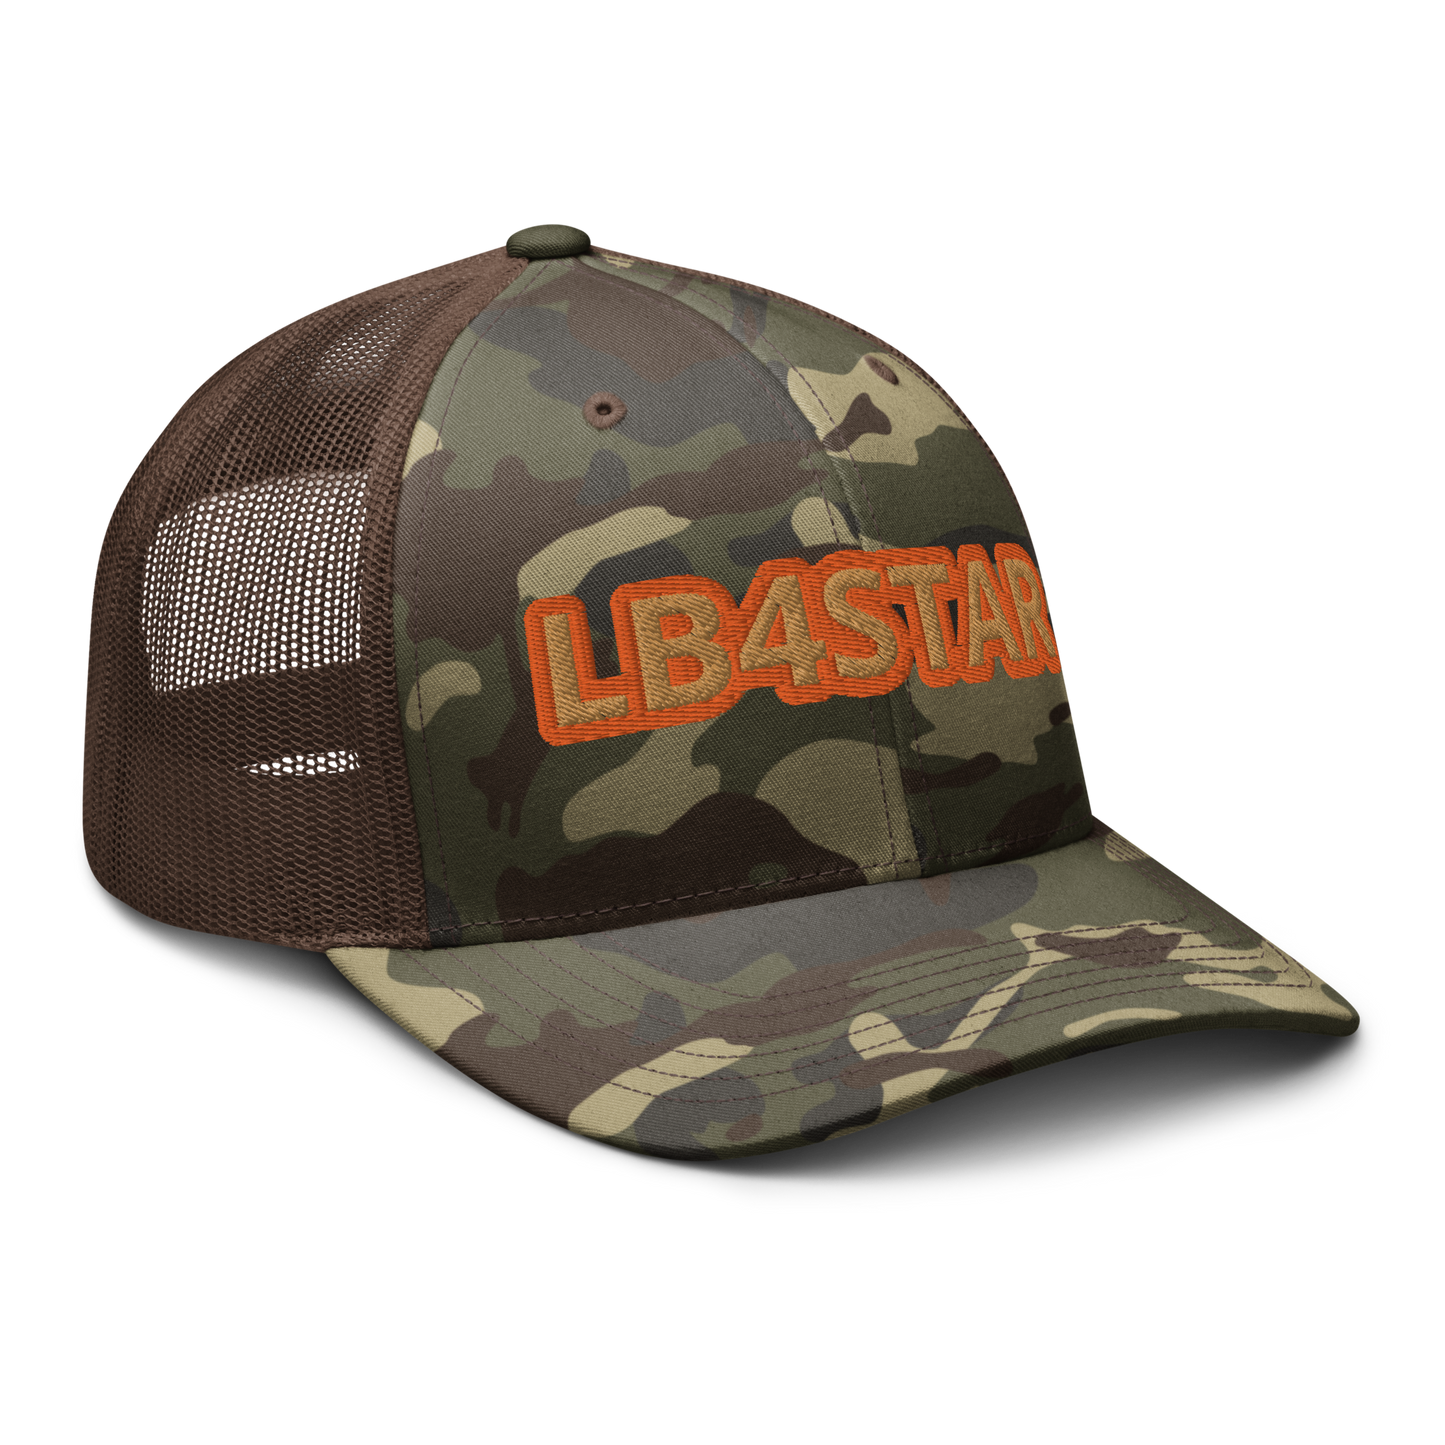 Camouflage trucker hat LB4ASTAR